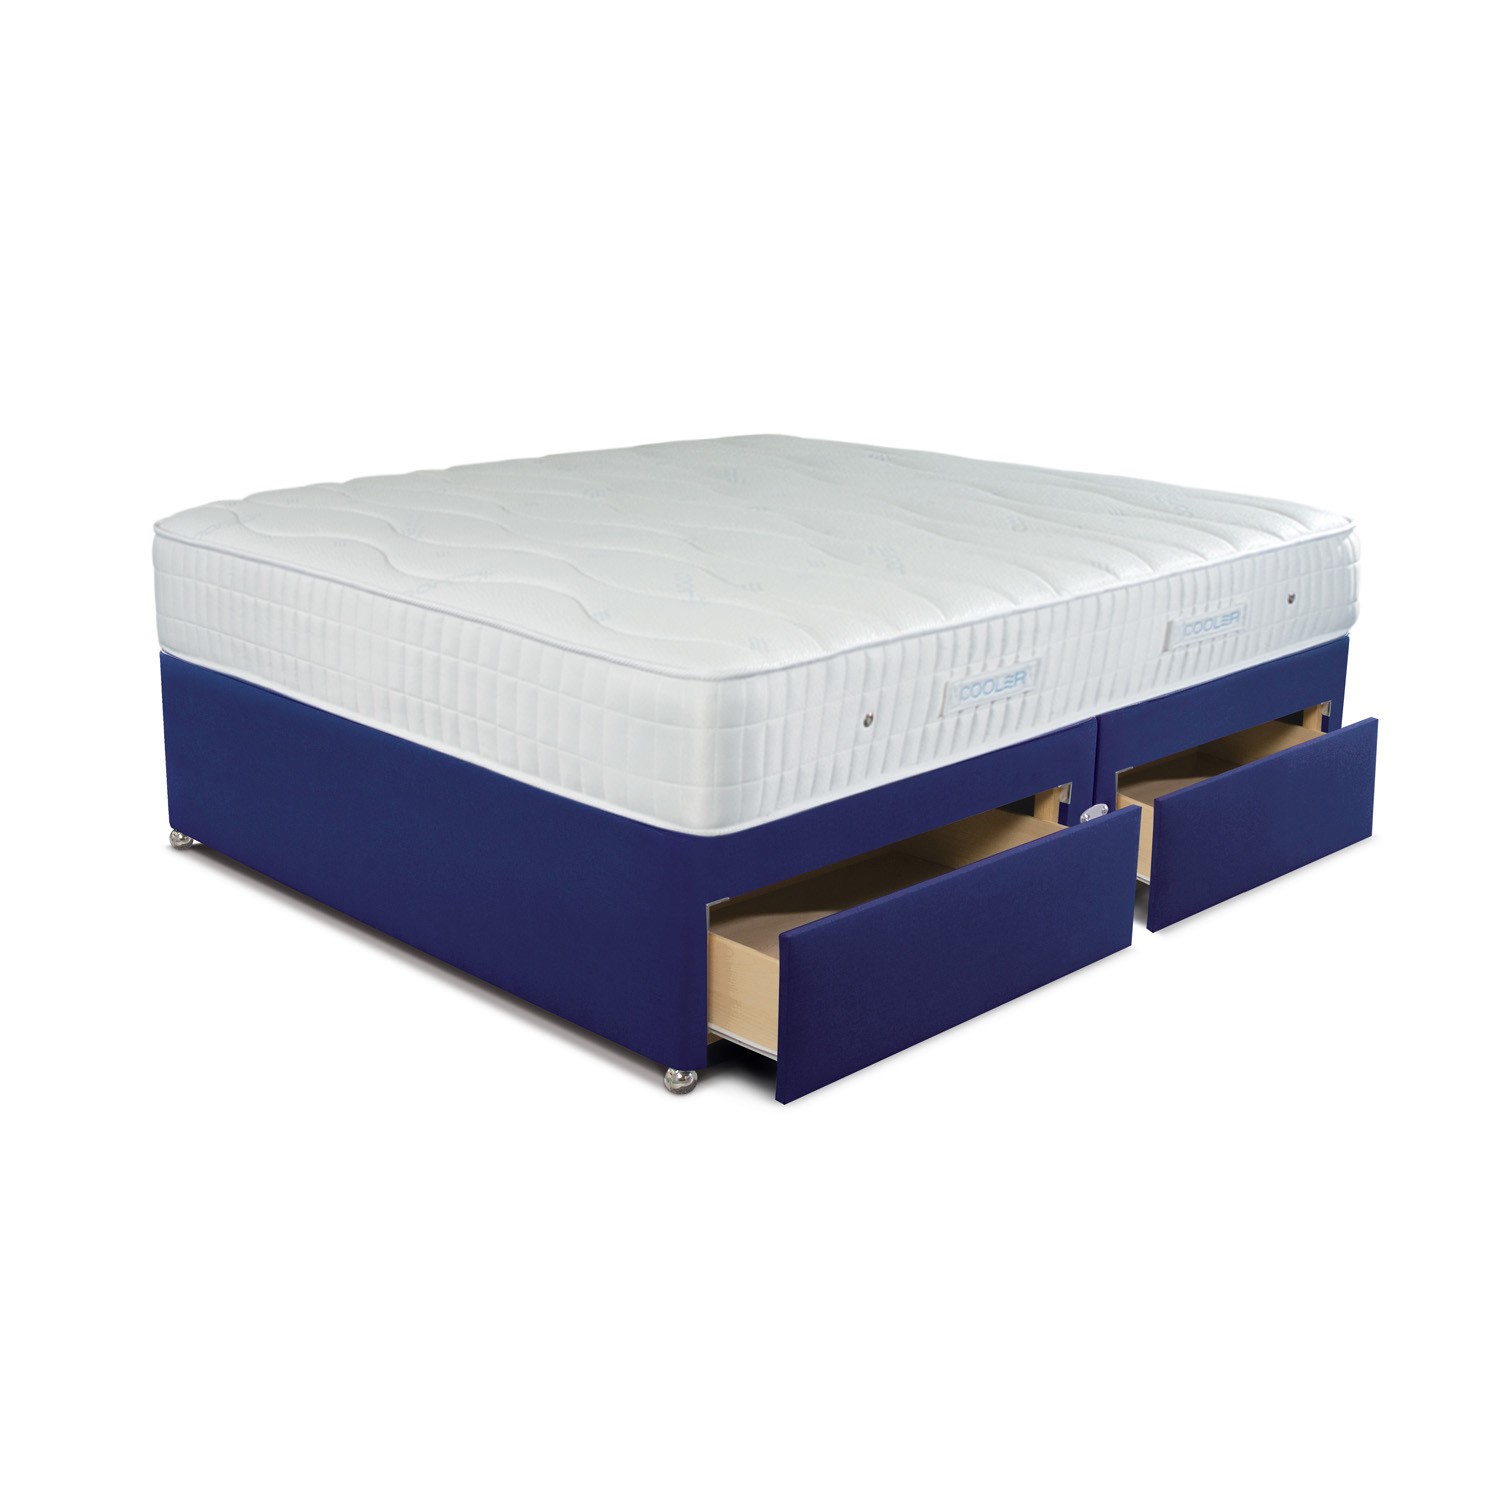 Photo of Sleepeezee super king 4 drawer divan bed in plush navy with cooler pinnacle 1000 mattress